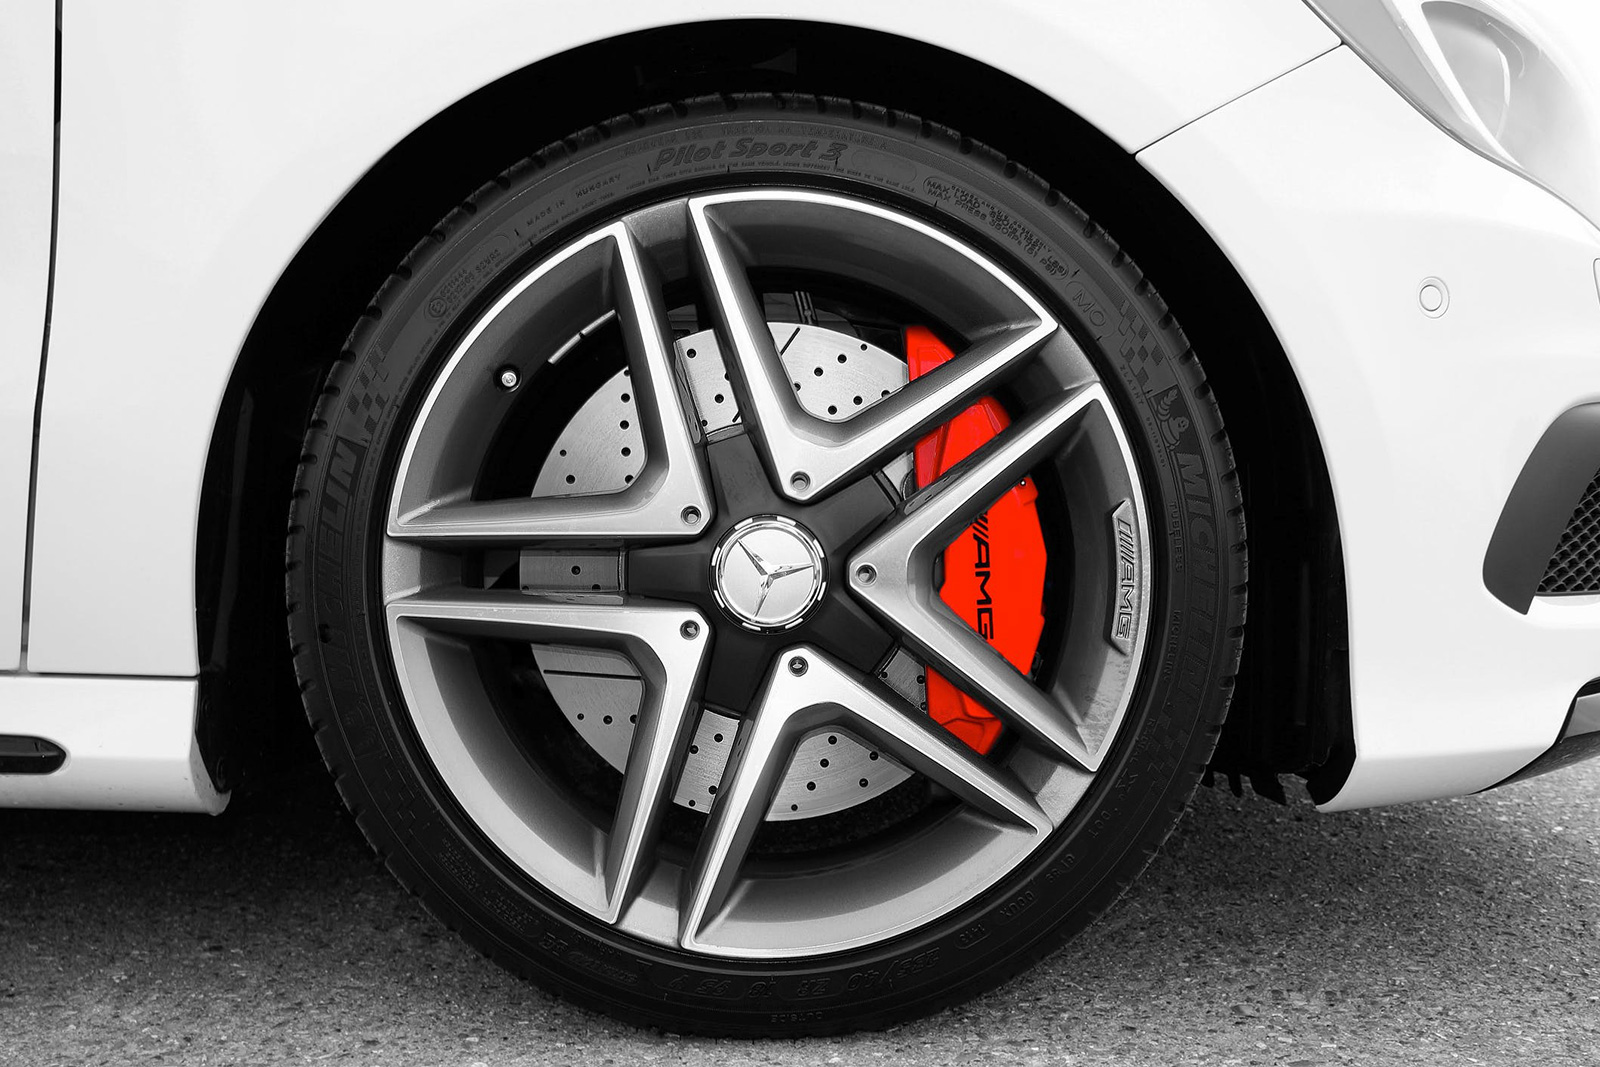 Example car wheel